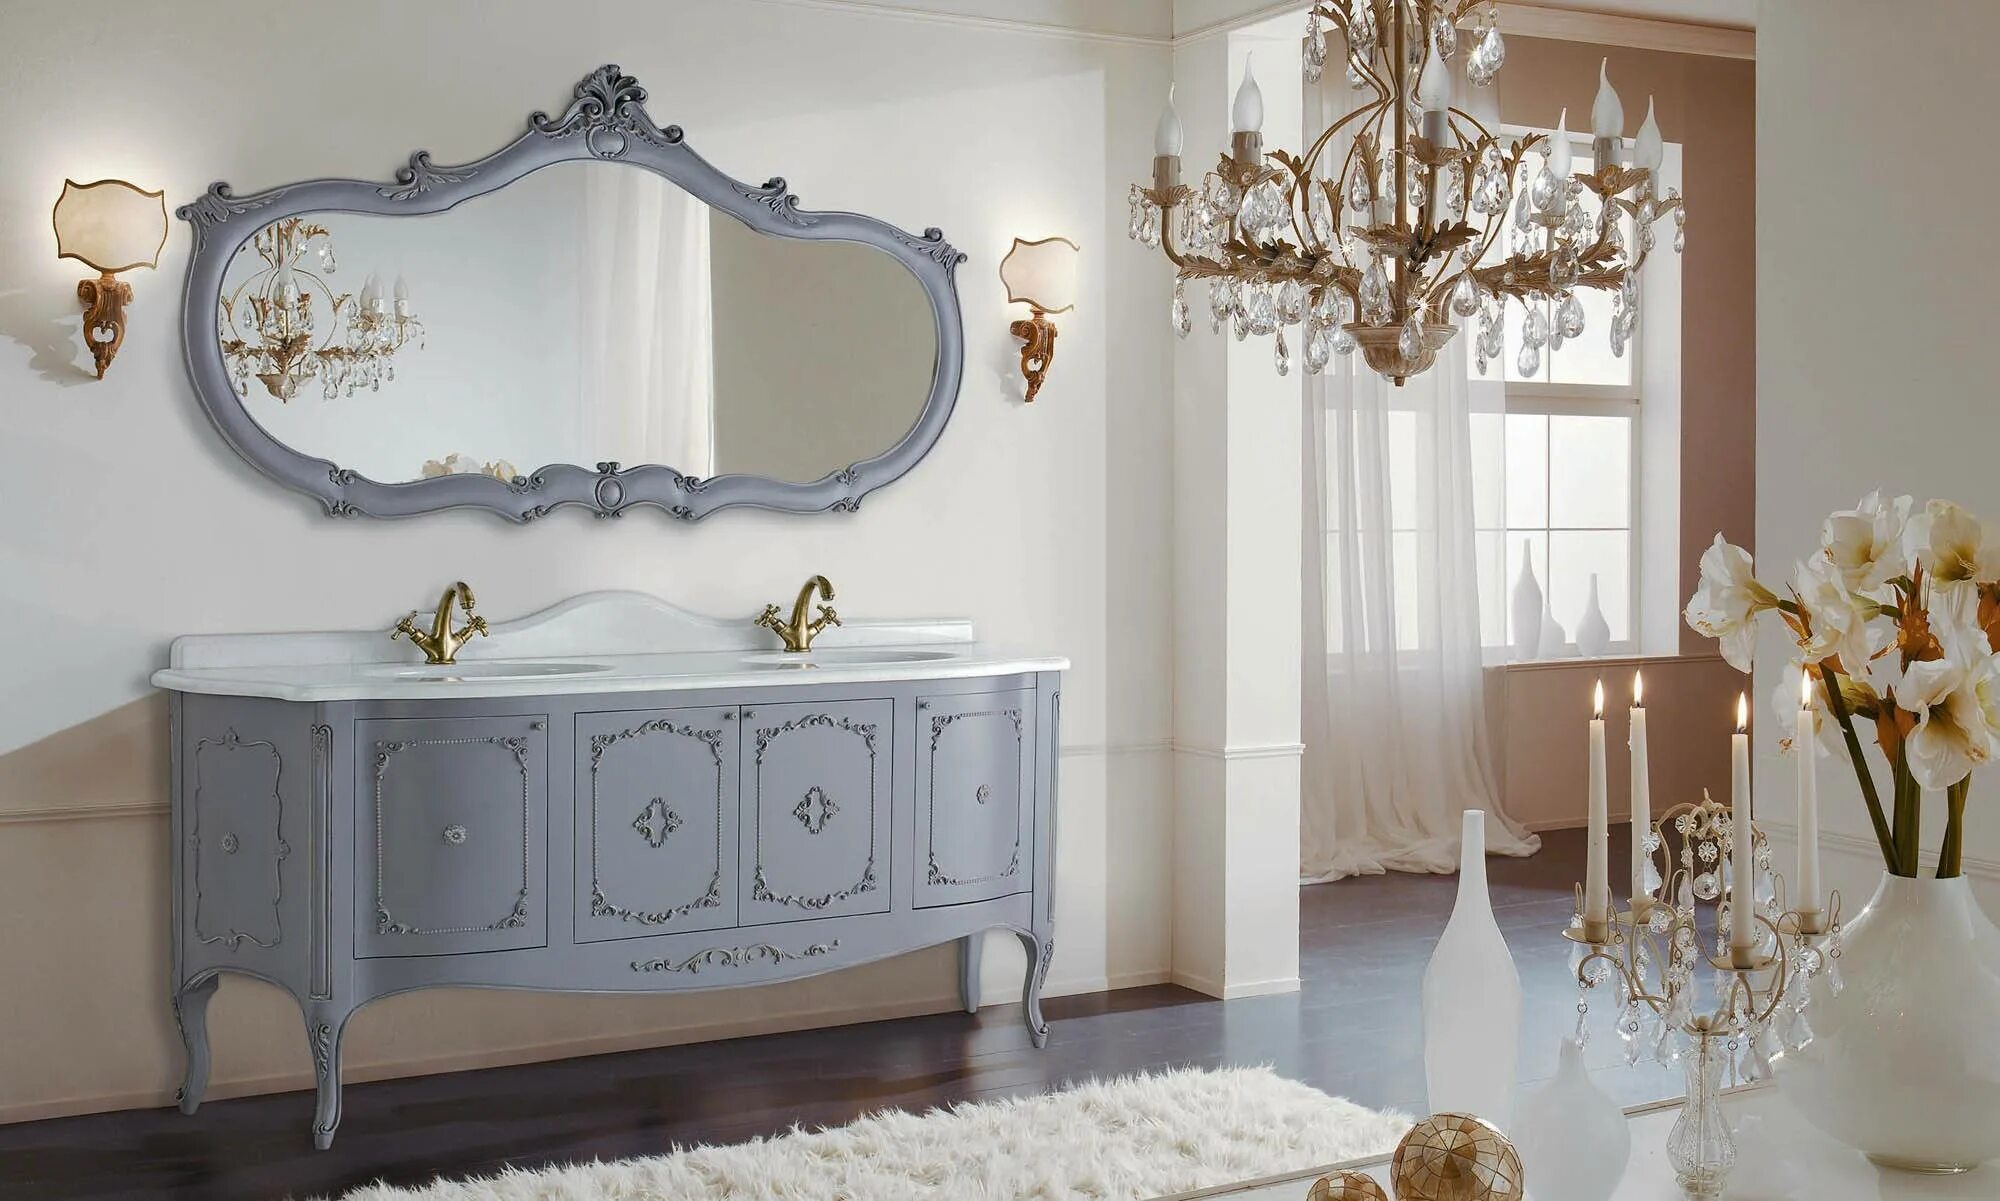 Mobili di Castello сантехника. Мебель для ванной Arco mobili. Мебель для ванной Кастелло. Мебель для ванной Италия. Мебель для ванны италия